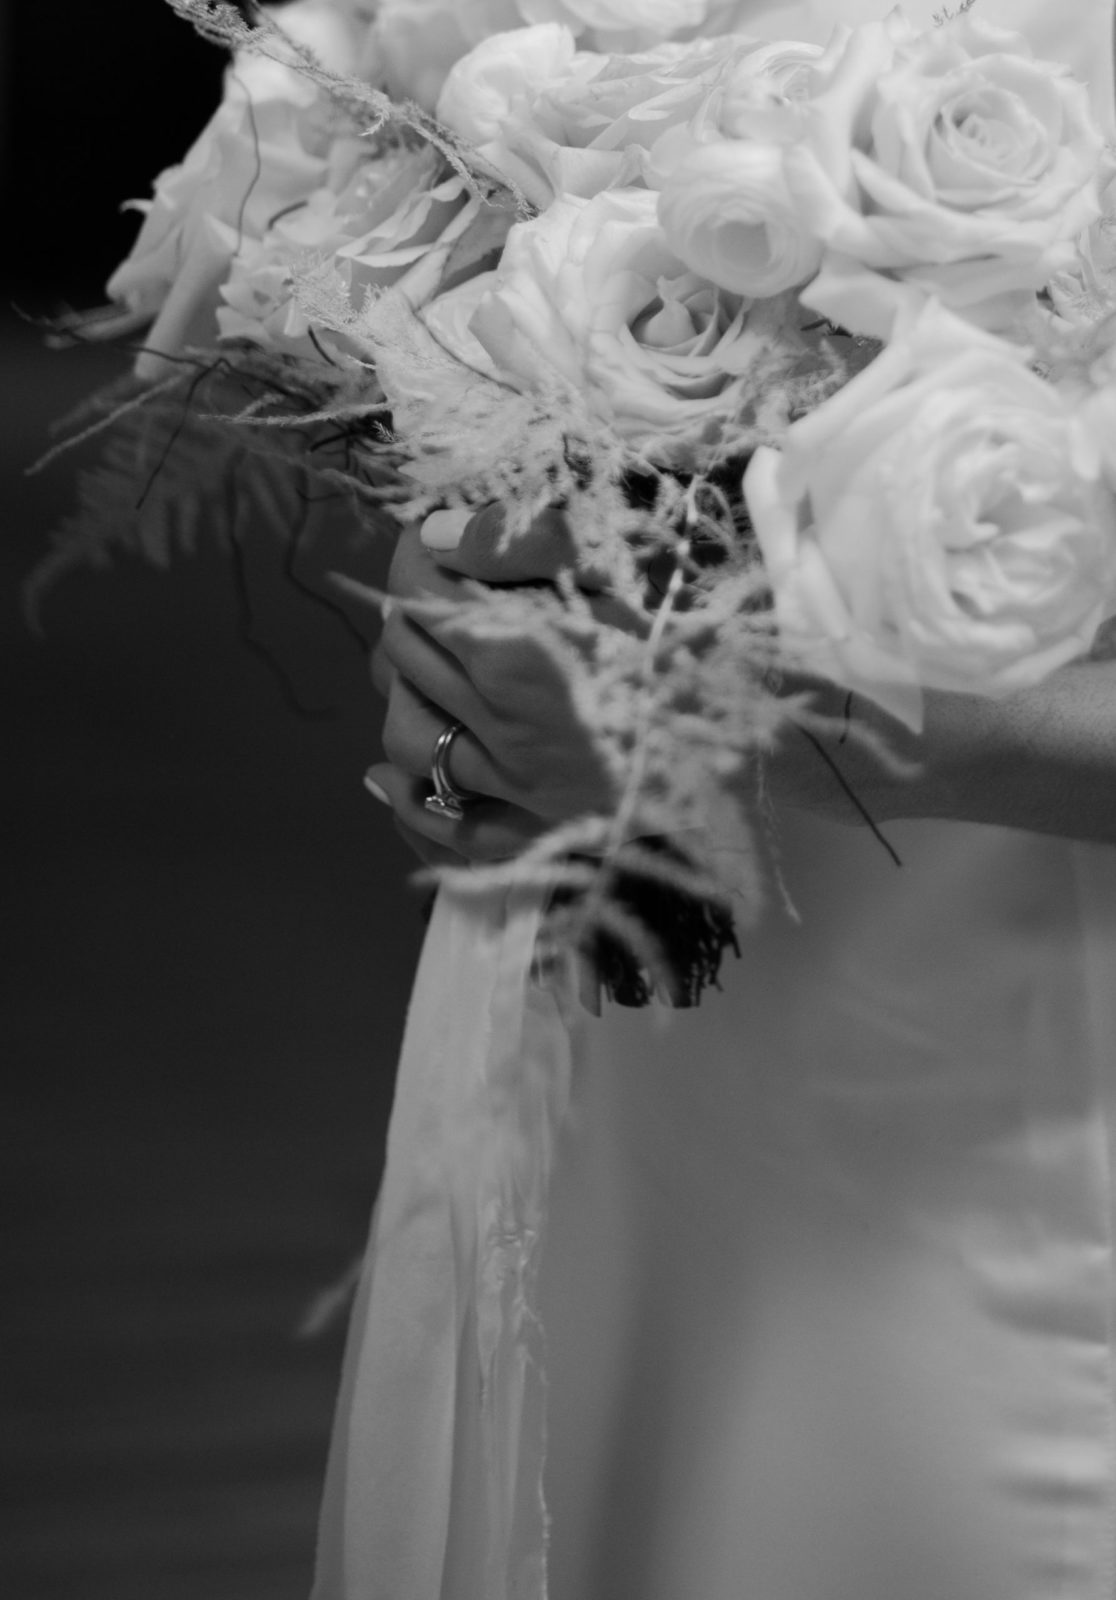 wedding details, unique wedding bouquet, black and white photography